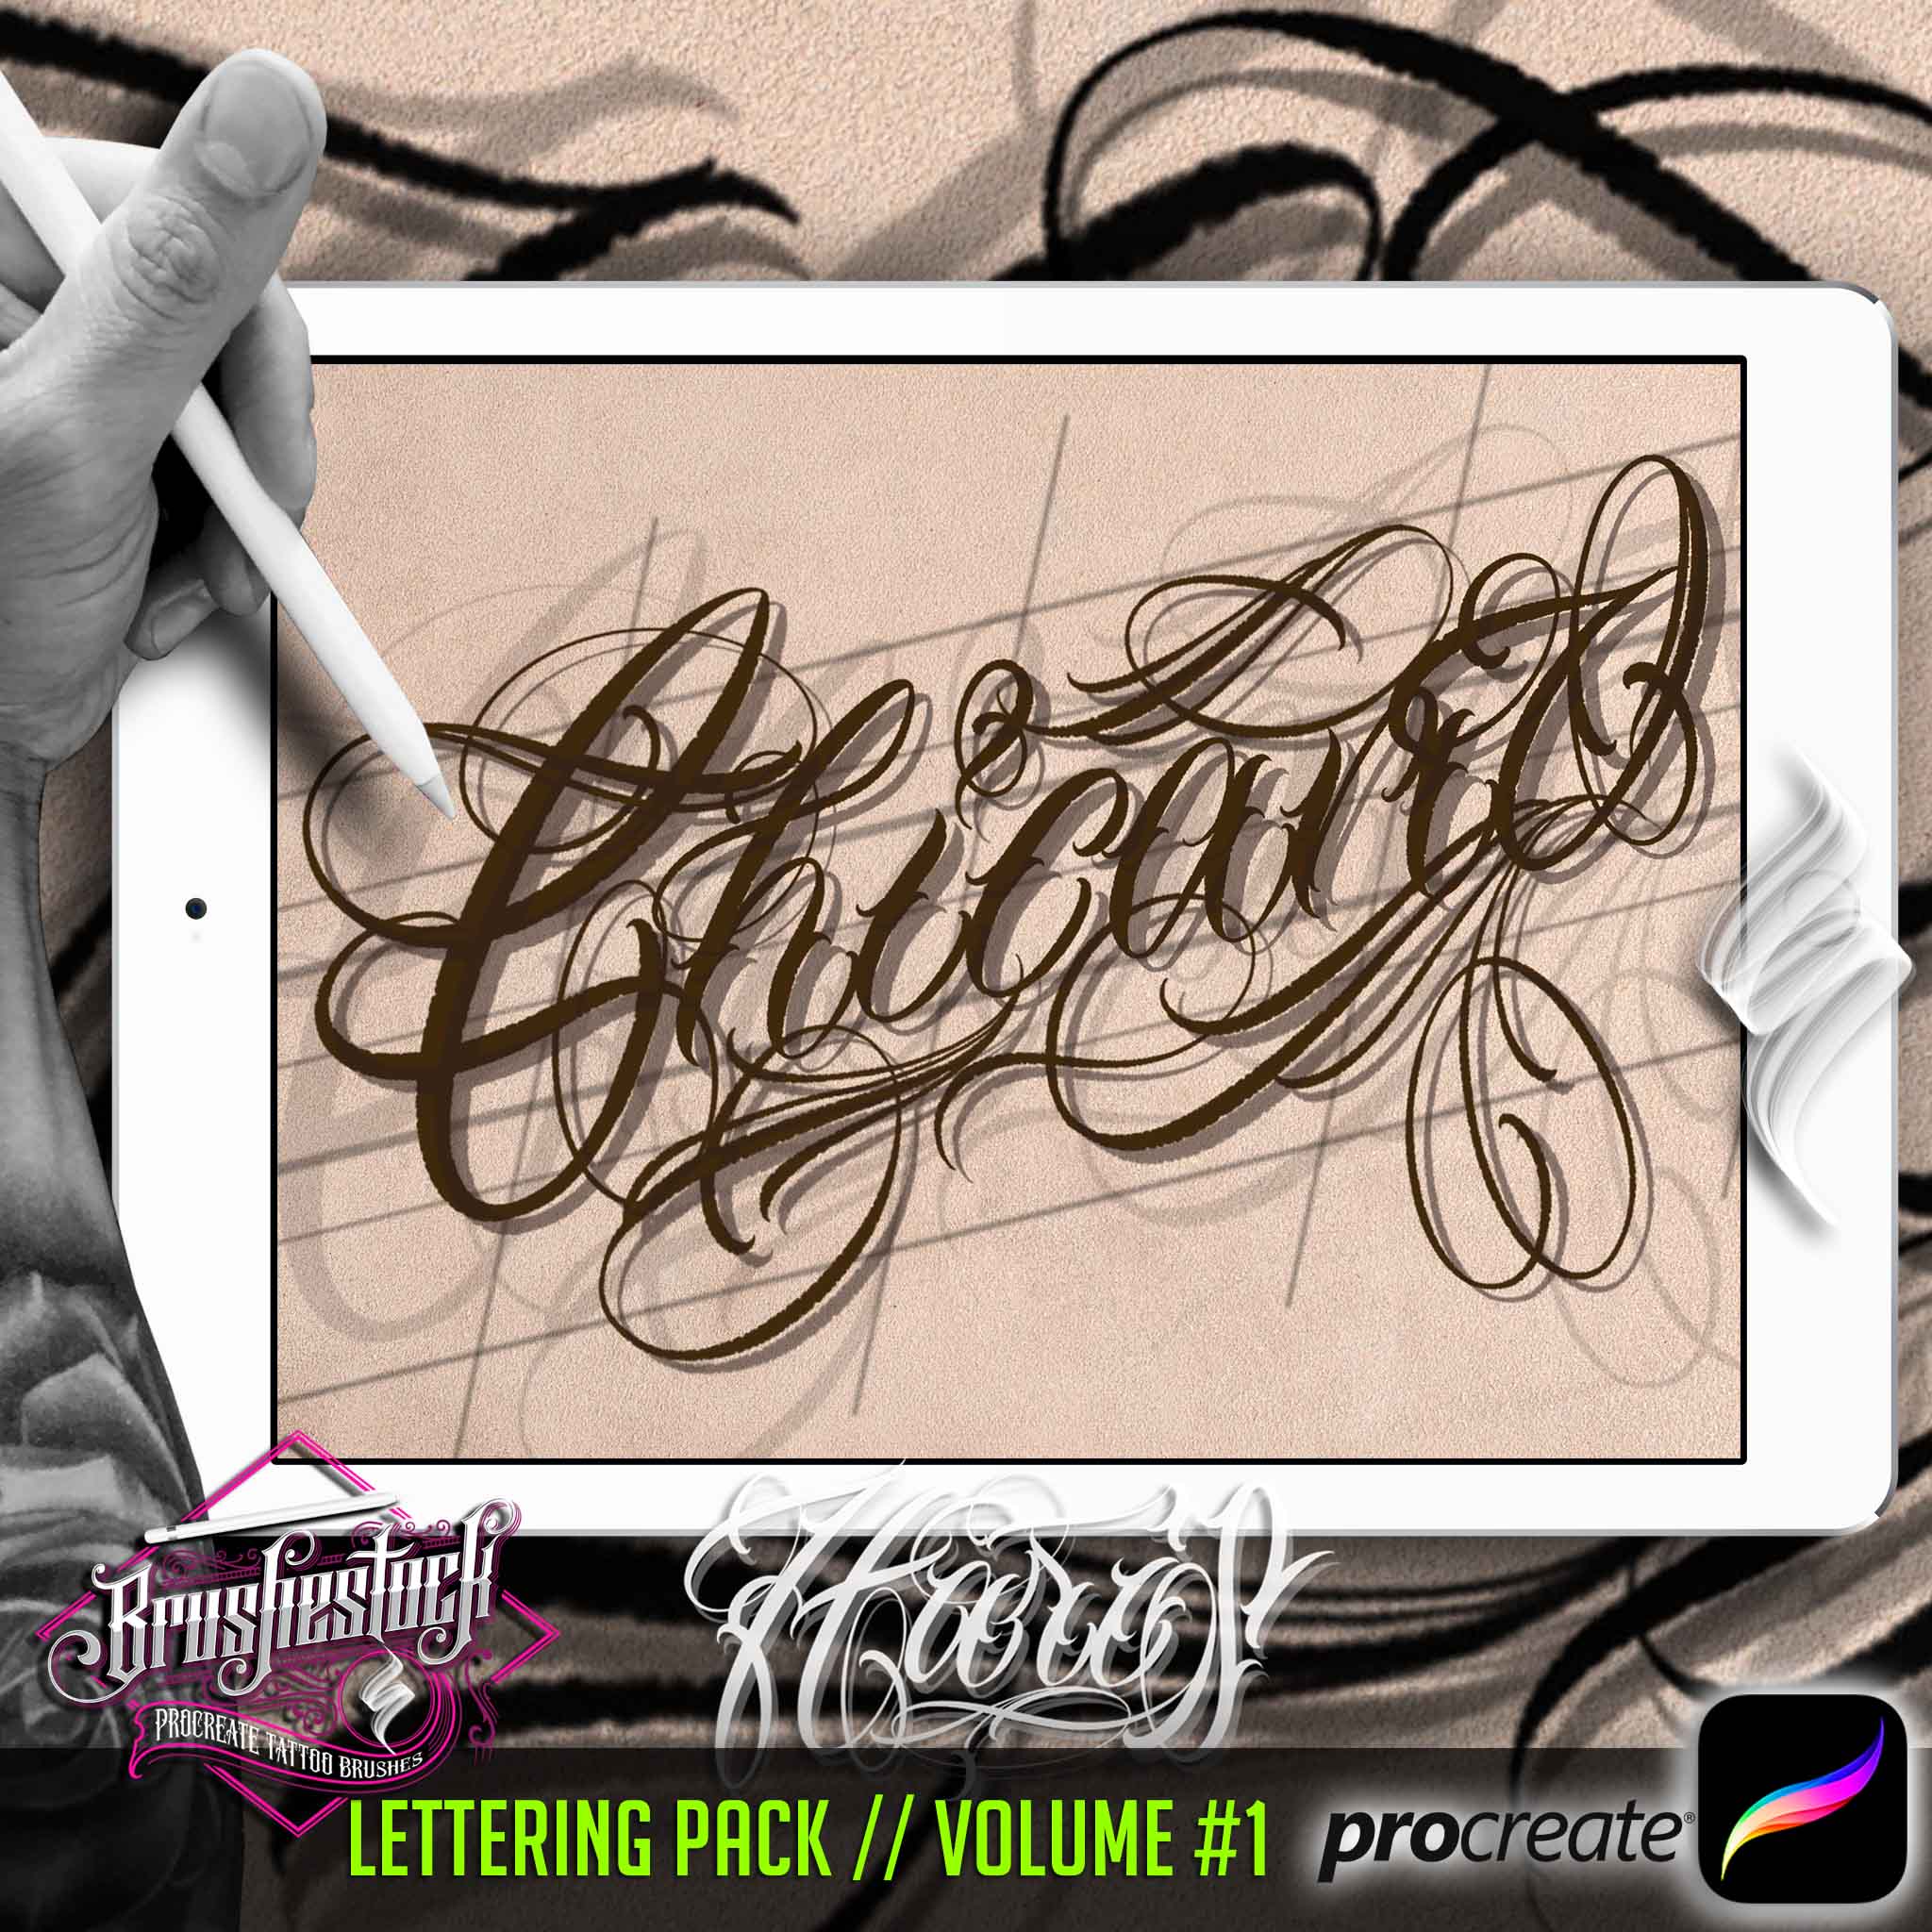 218 Chicano Lettering Tattoo Brushes in this Brushset Pack Volume 1 for Procreate app on iPad – Brushestock